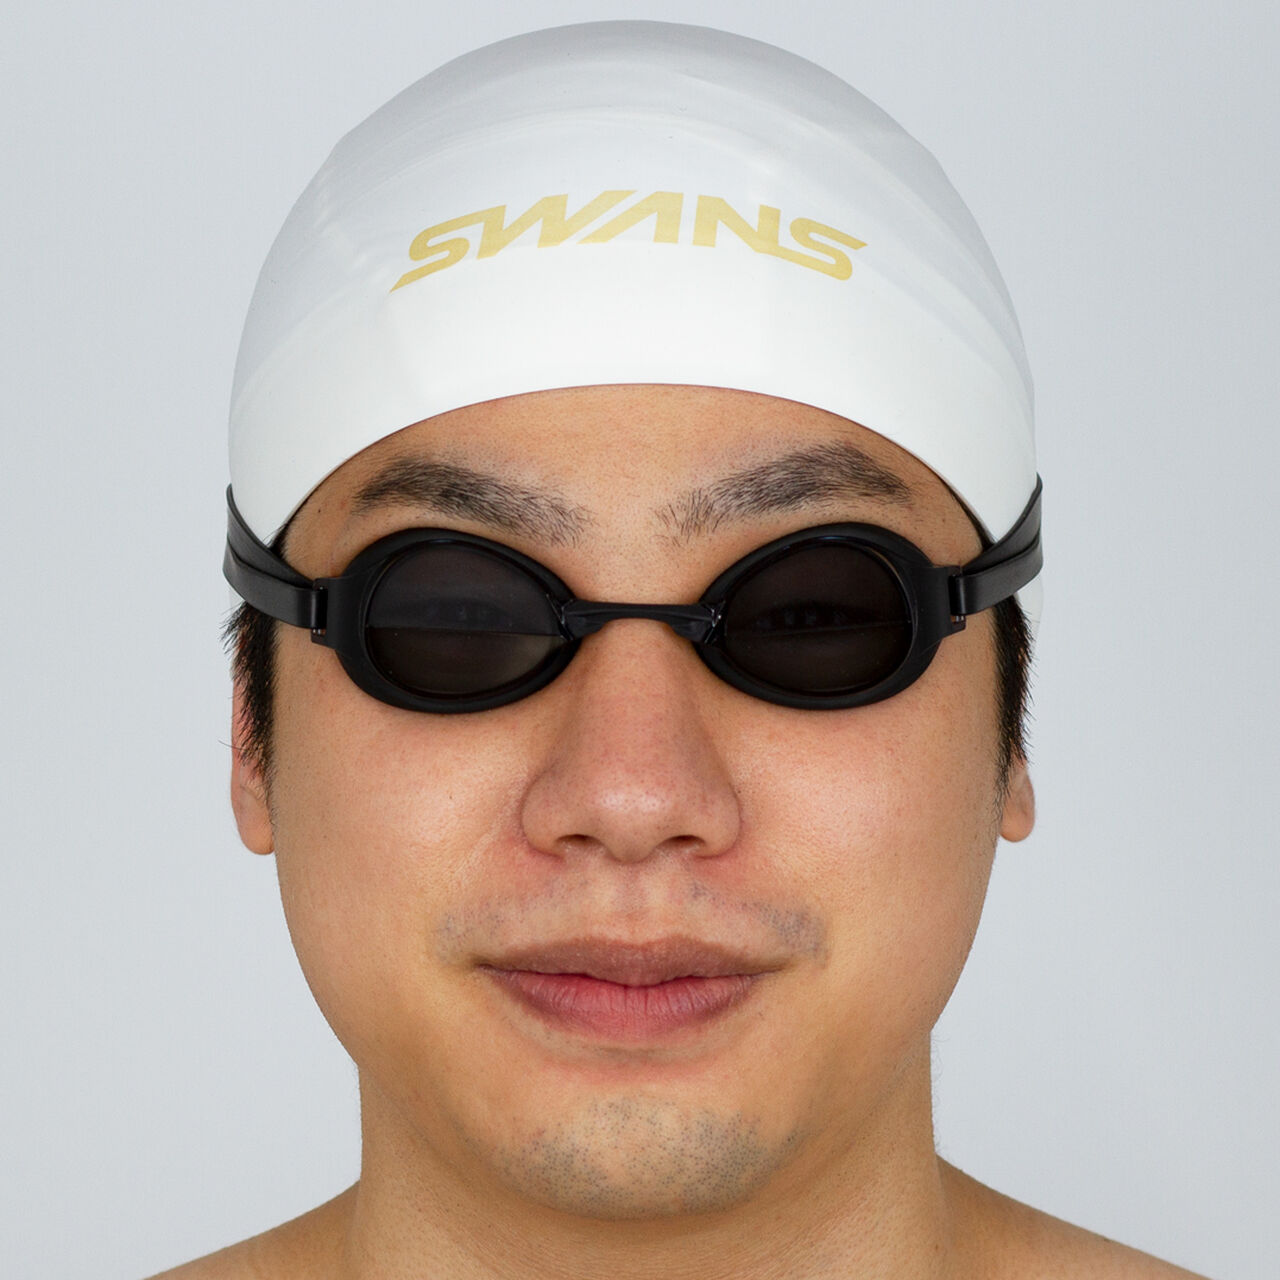 SWANS (速安视) IGNITION-M CY 透明镜片 x 黄色镜面 游泳镜,Opt2, large image number 1